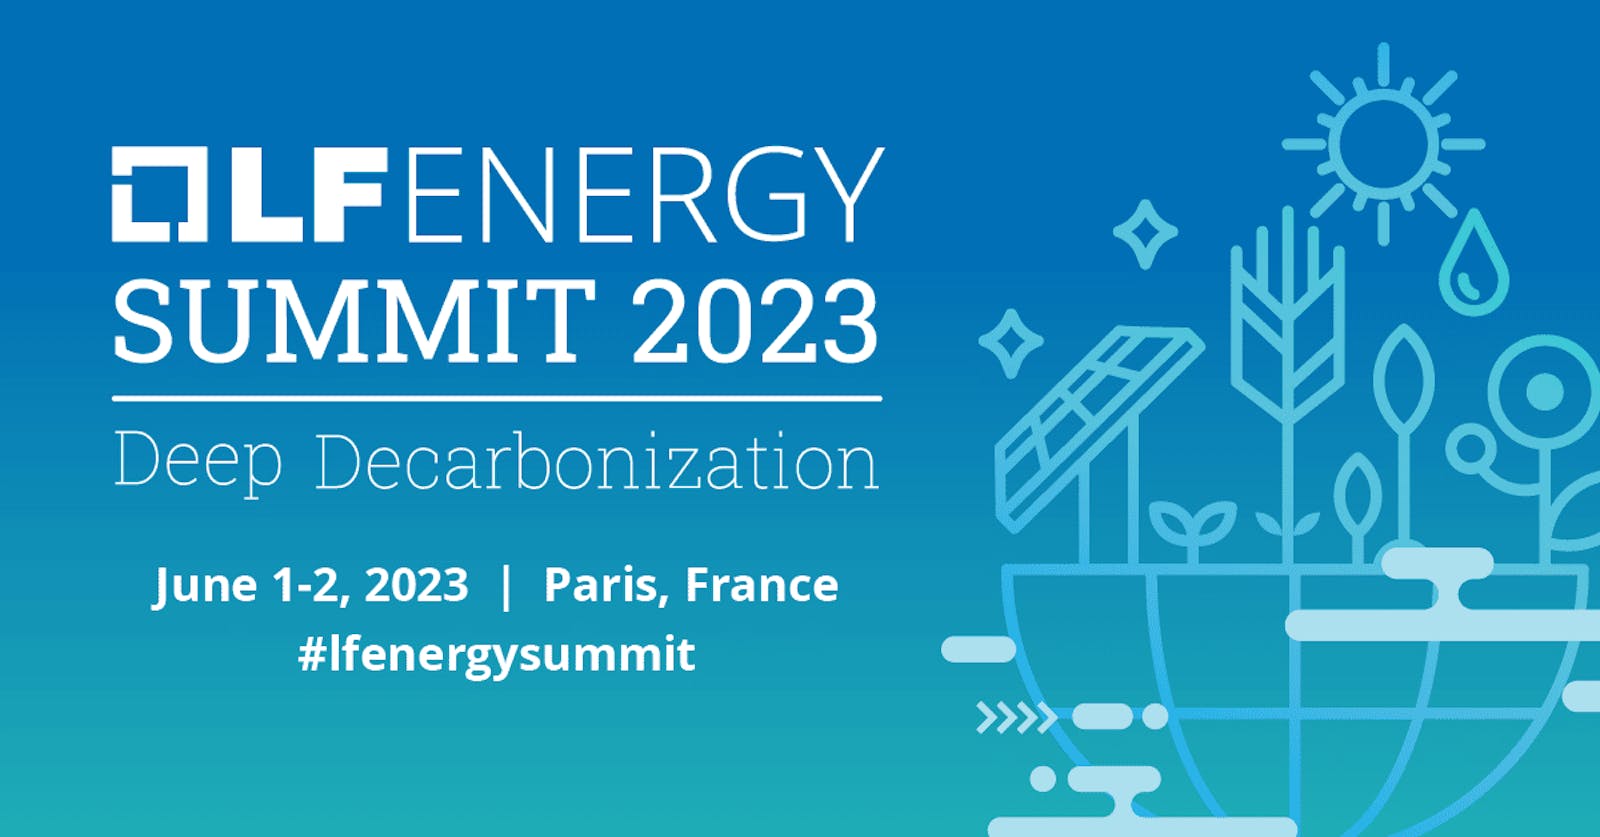 My LF Energy Summit 2023 Experience